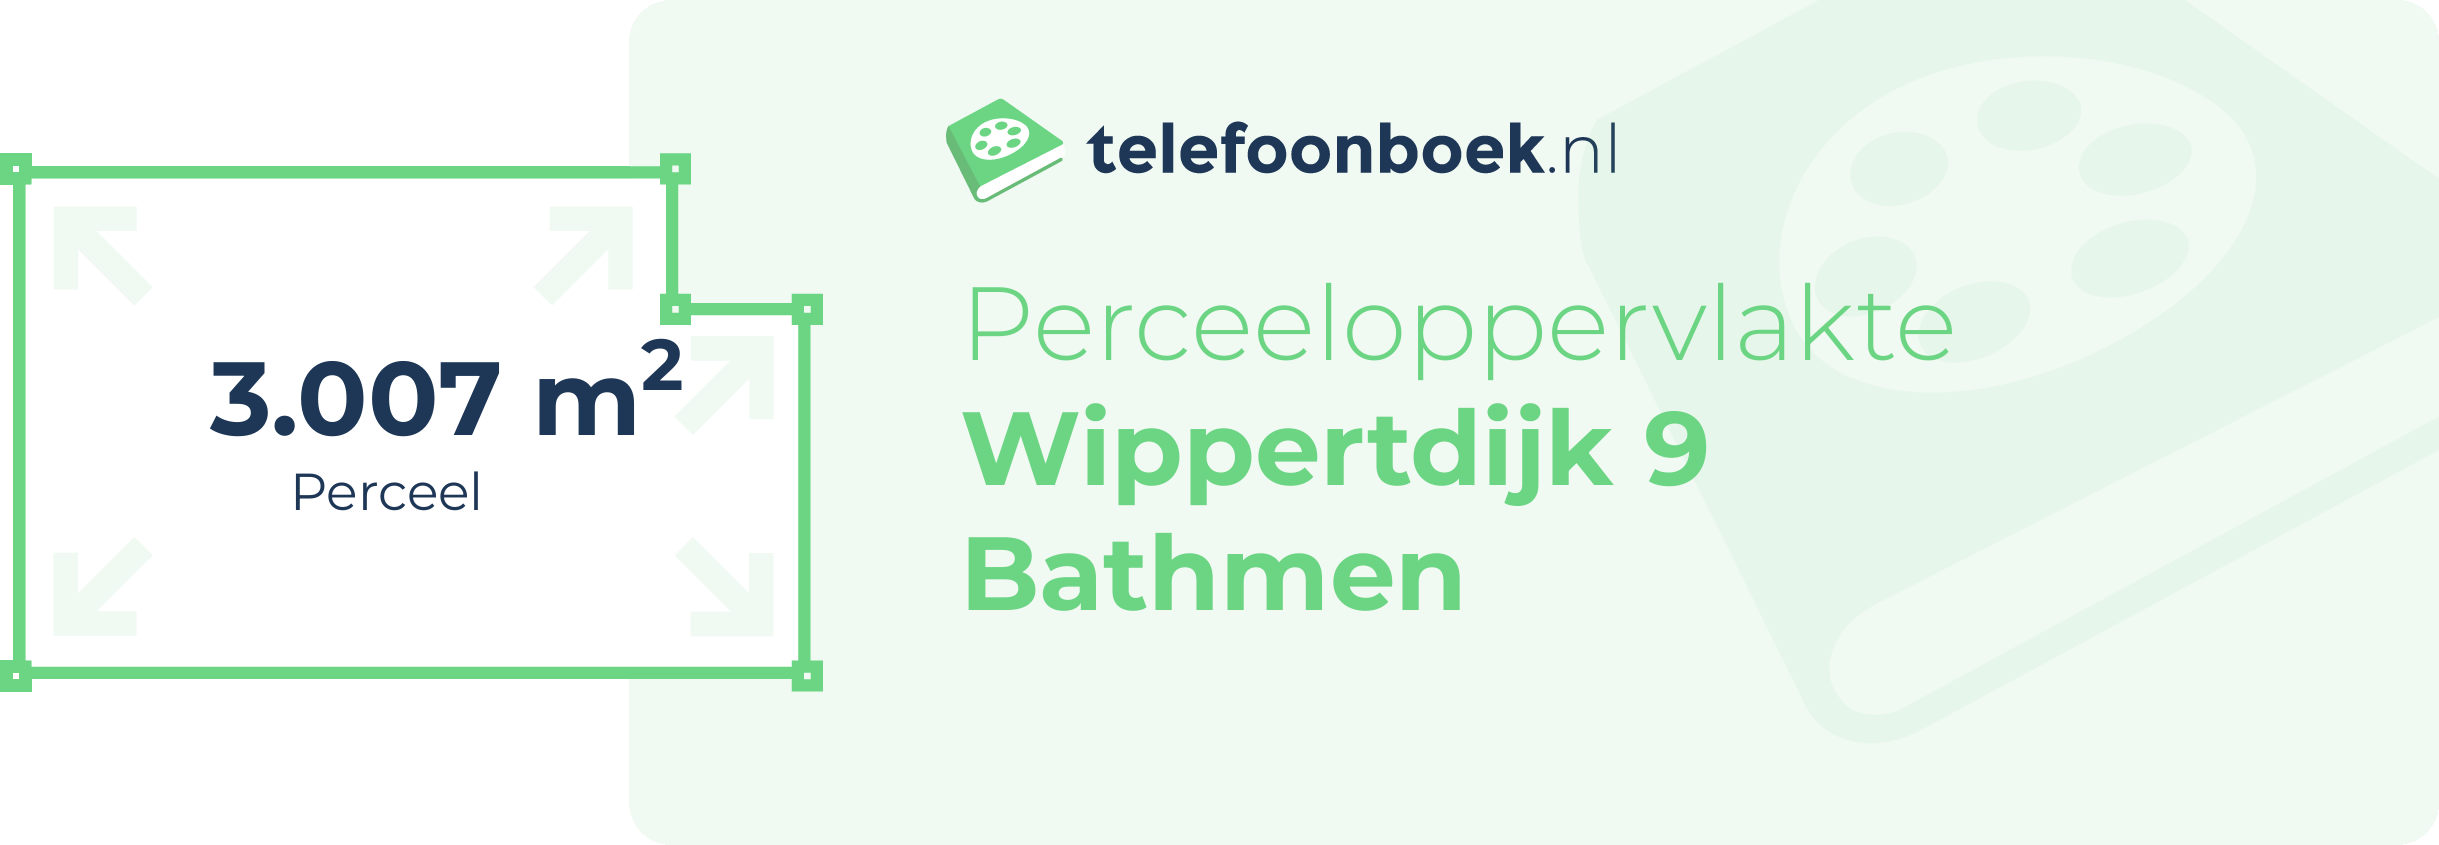 Perceeloppervlakte Wippertdijk 9 Bathmen